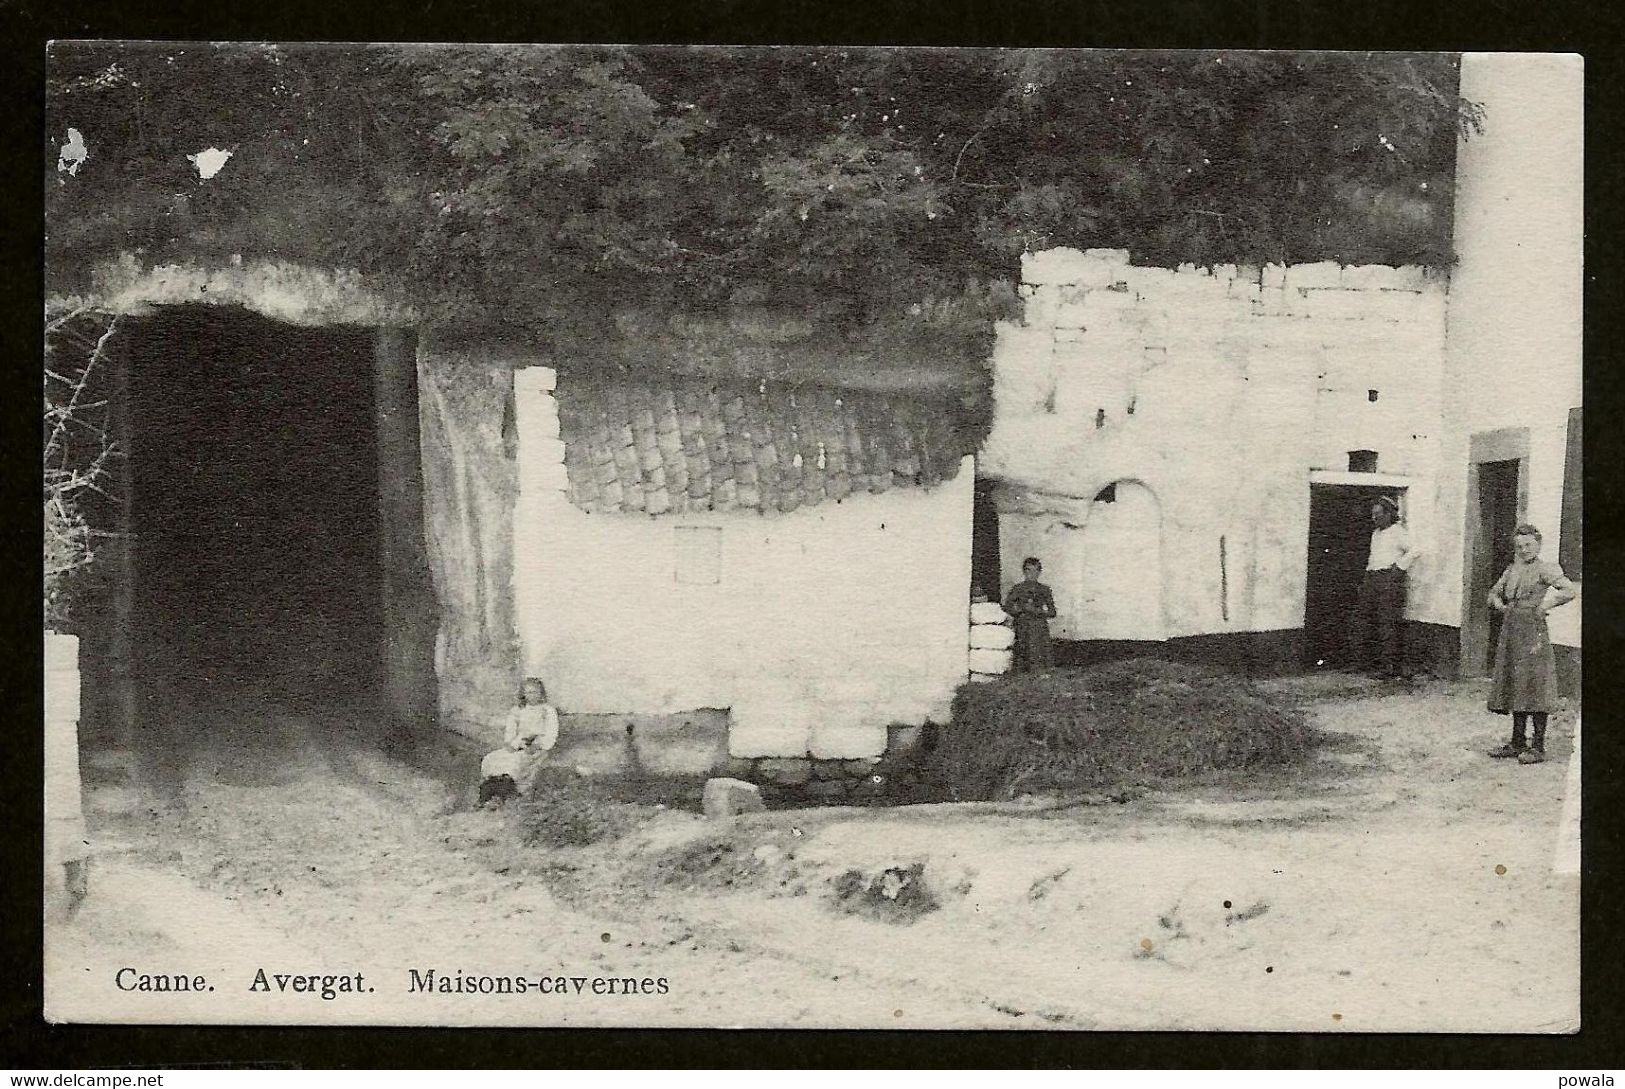 Relais Canne Sterstempel 30 VI 1912 Op Zichtkaart Uit Kanne Avergat Maisons-cavernes Naar Lede - Riemst